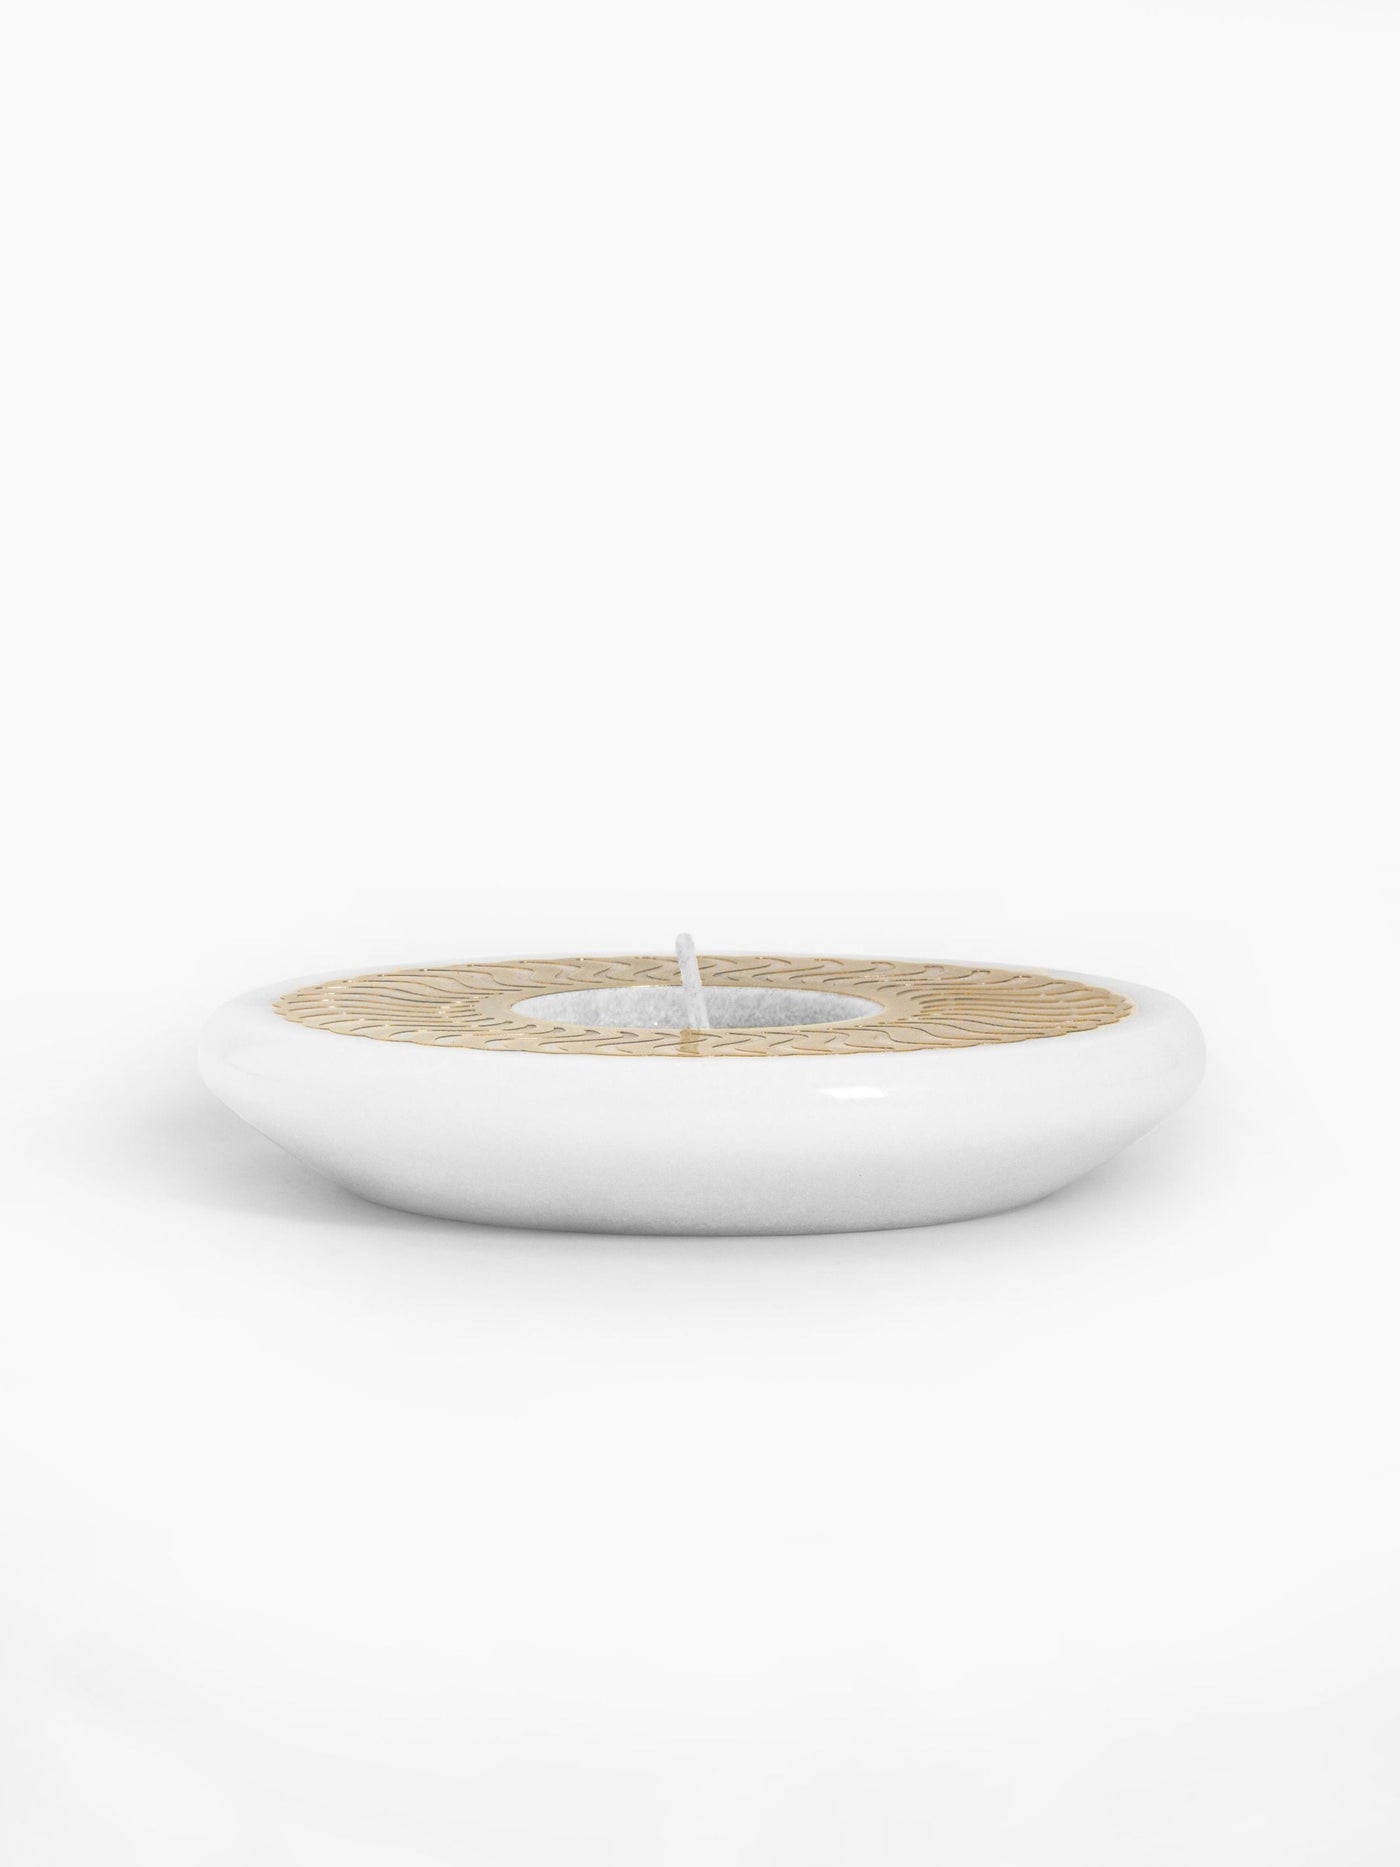 Celestial Tea Light Candle - White